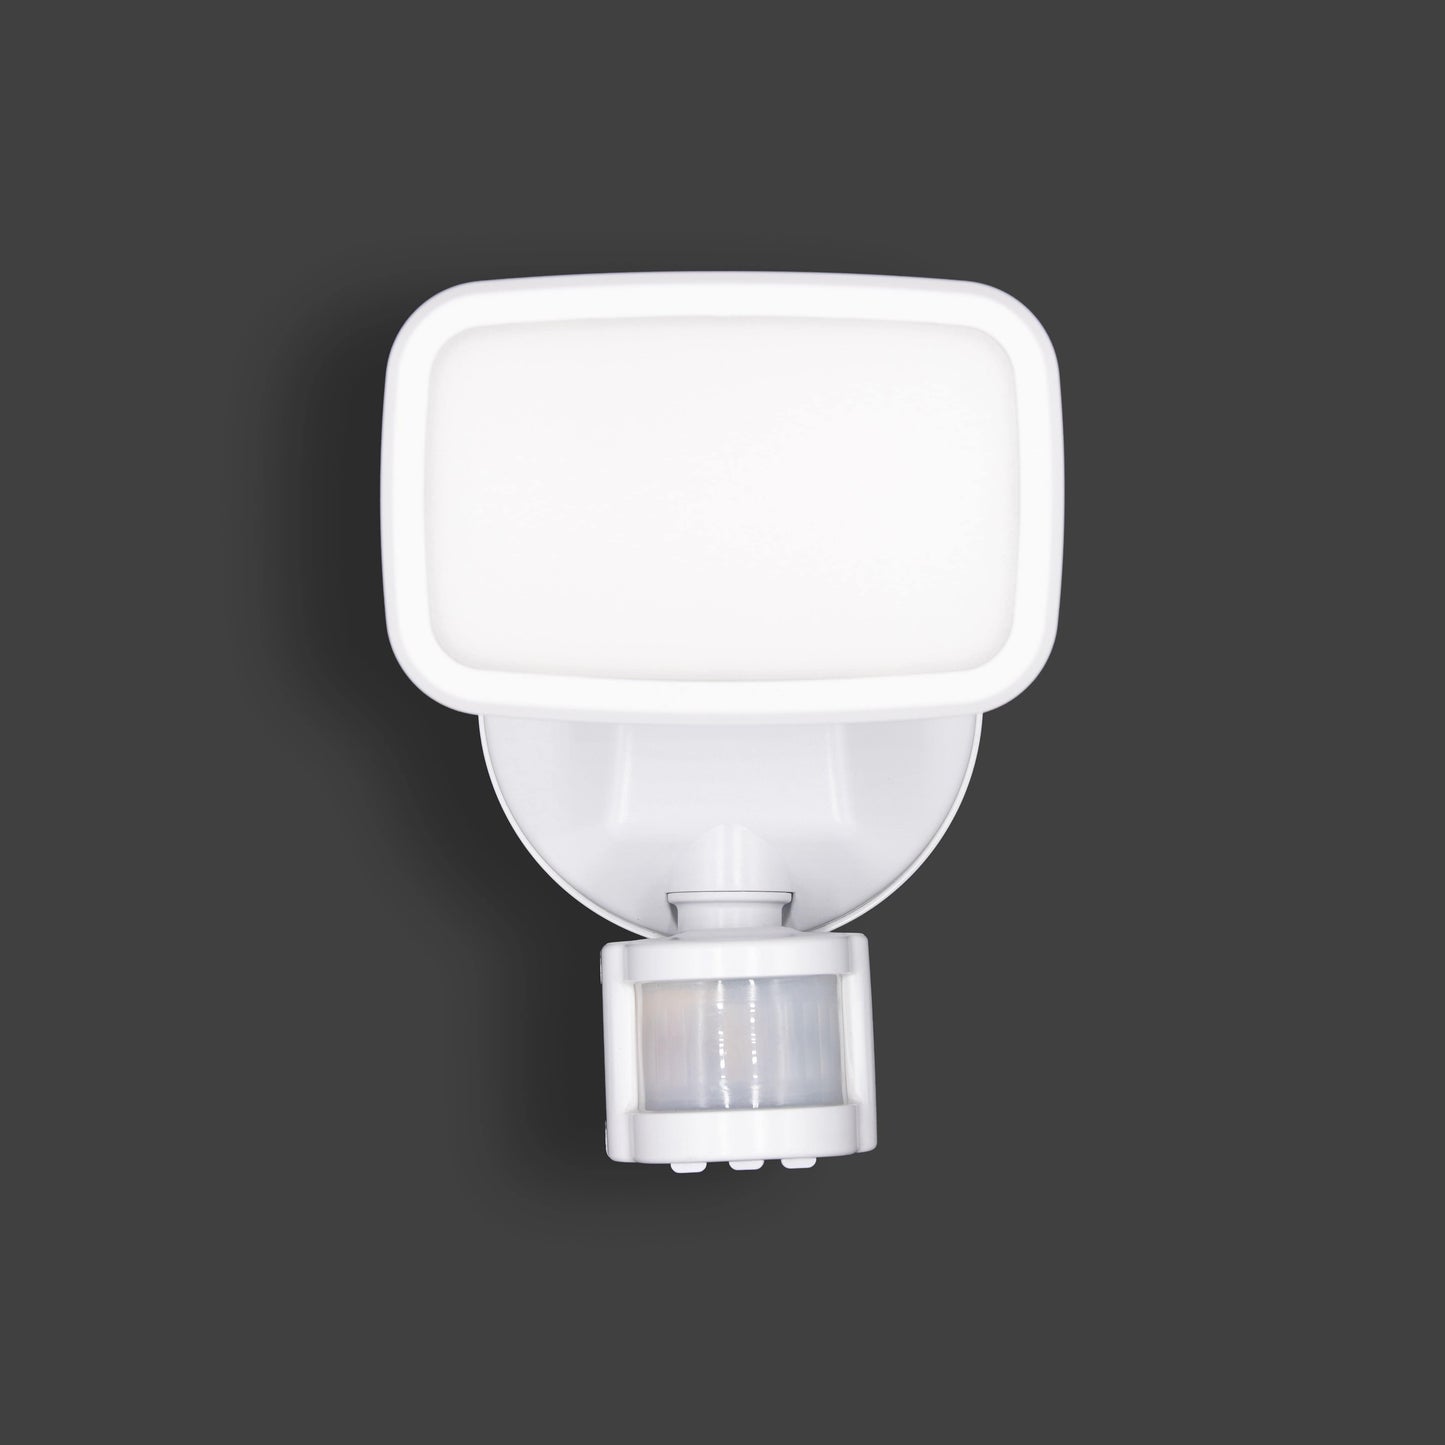 Lights  -  Lynn Security Spotlight - White  -  60002032